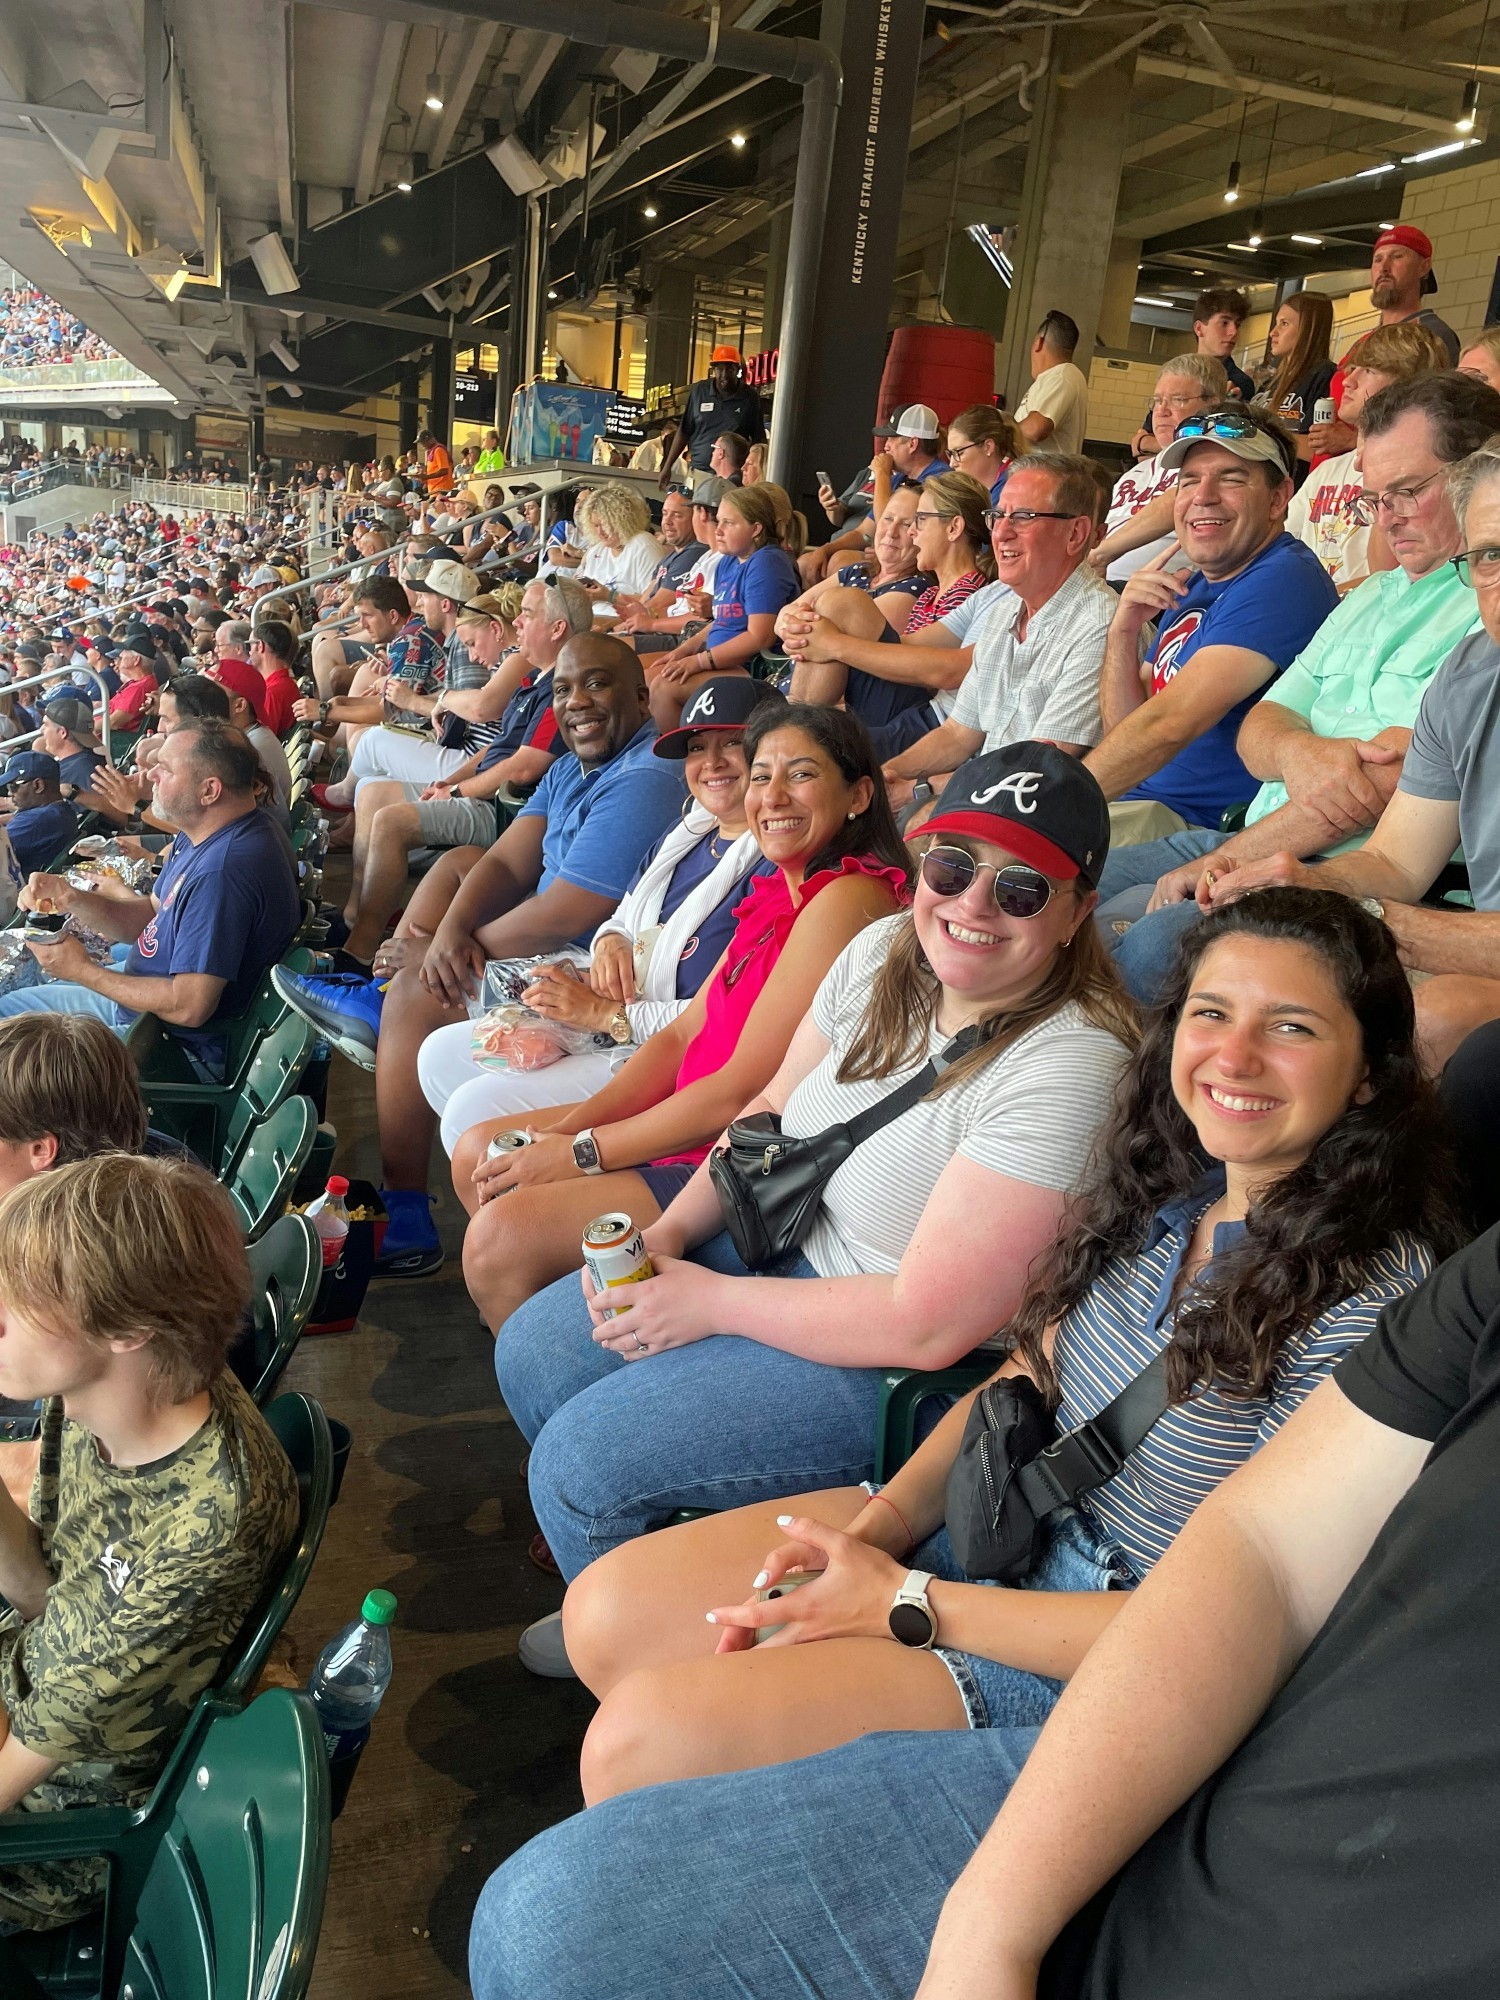 Our Team enjoying the Atlanta Braves baseball game.